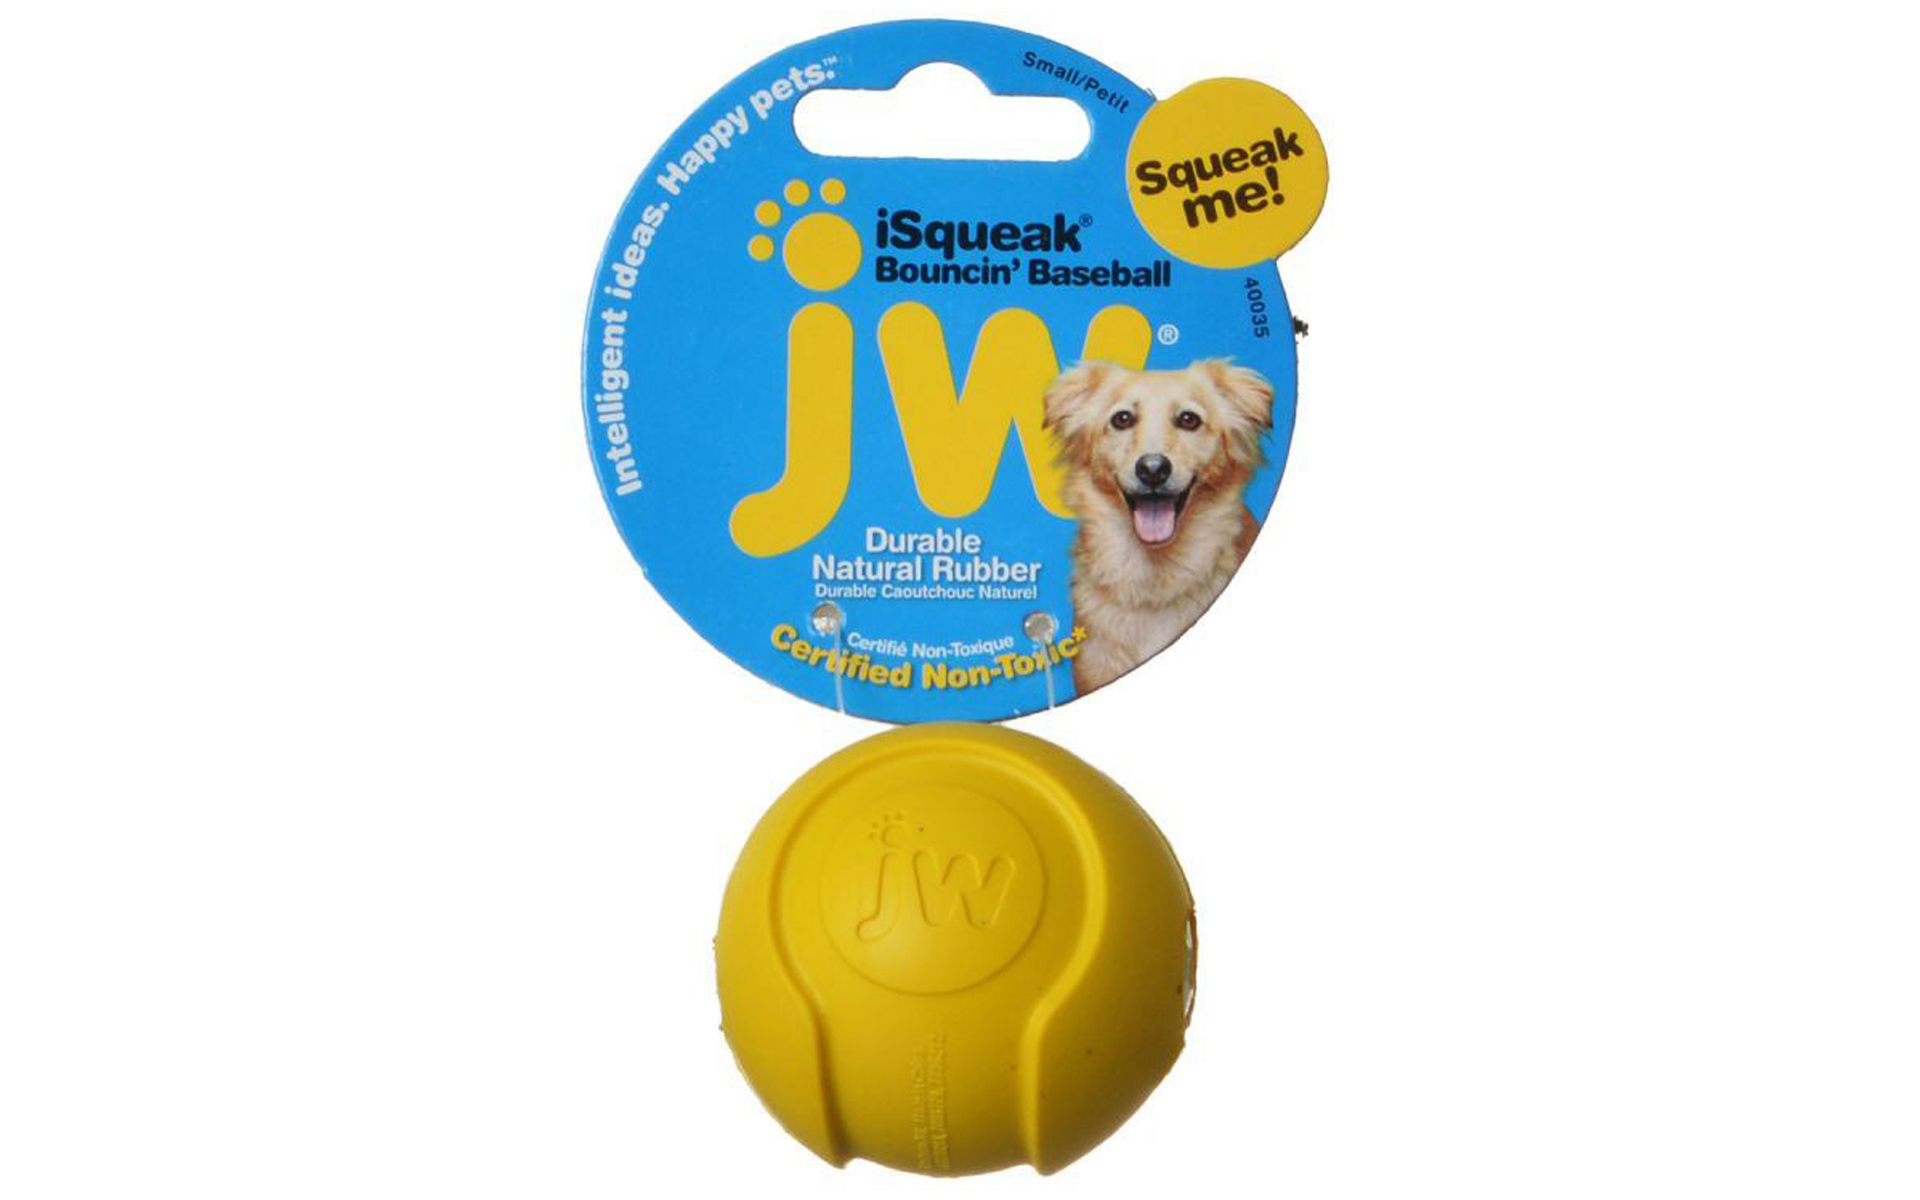 iSqueak Bouncing Baseball Rubber Dog Toy